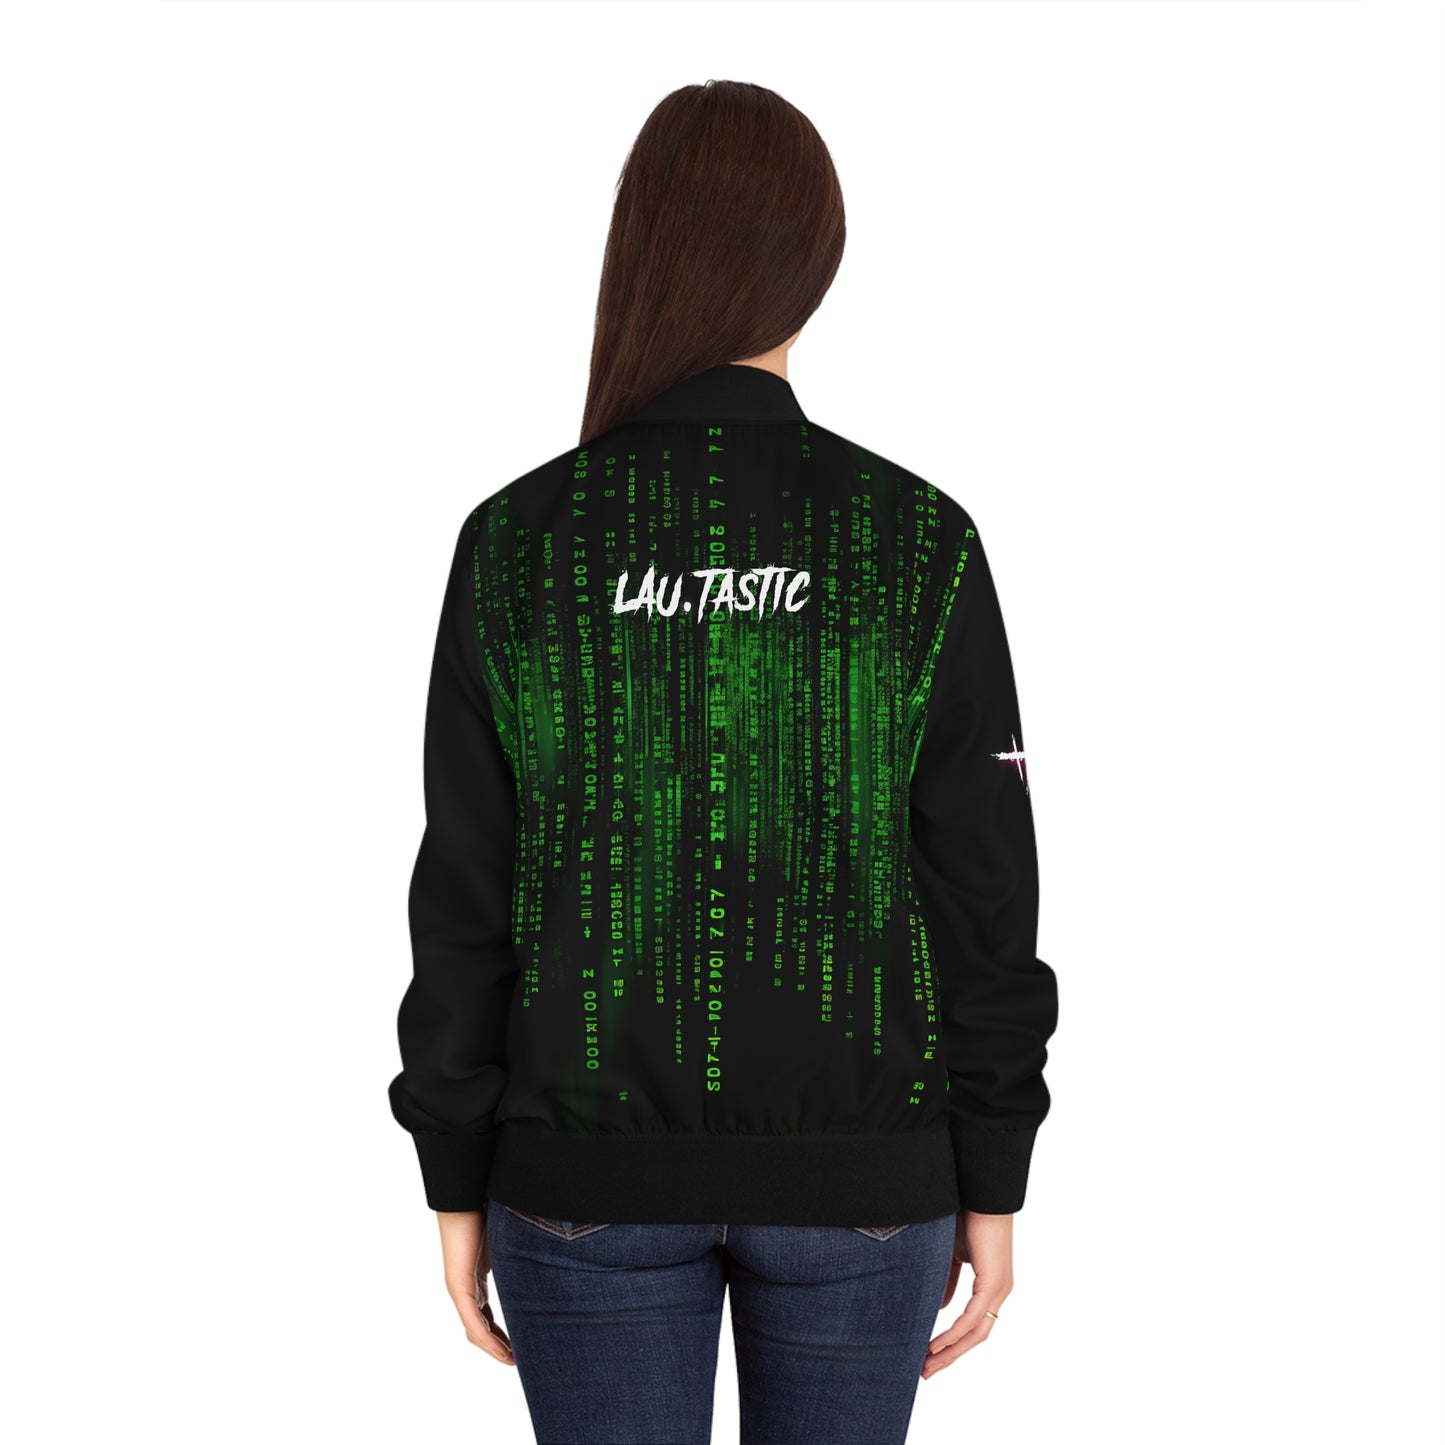 LAU.TASTIC | Matrix Green - Women's Bomber Jacket